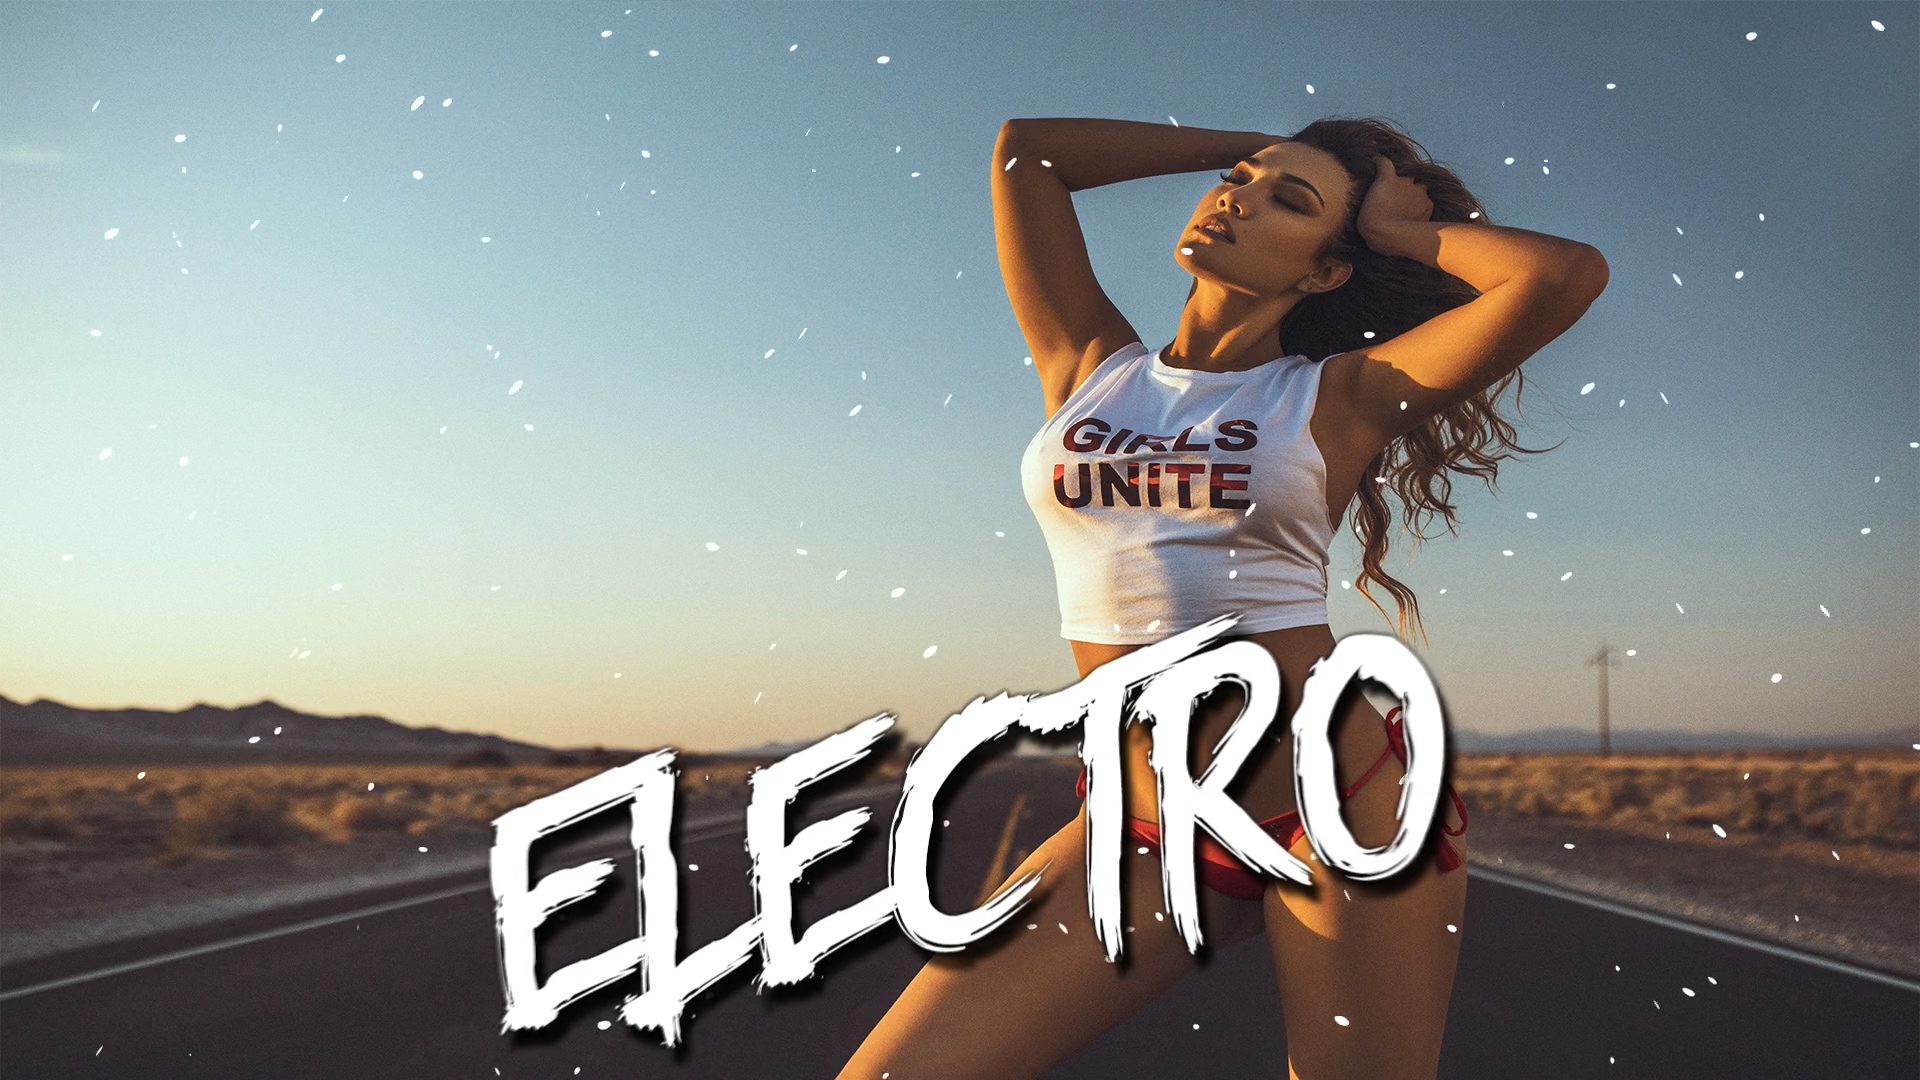 Inova - Glow 「 ELECTRO MUSIC 」 Музыка без АП | Copyright Free | Royalty Free Music